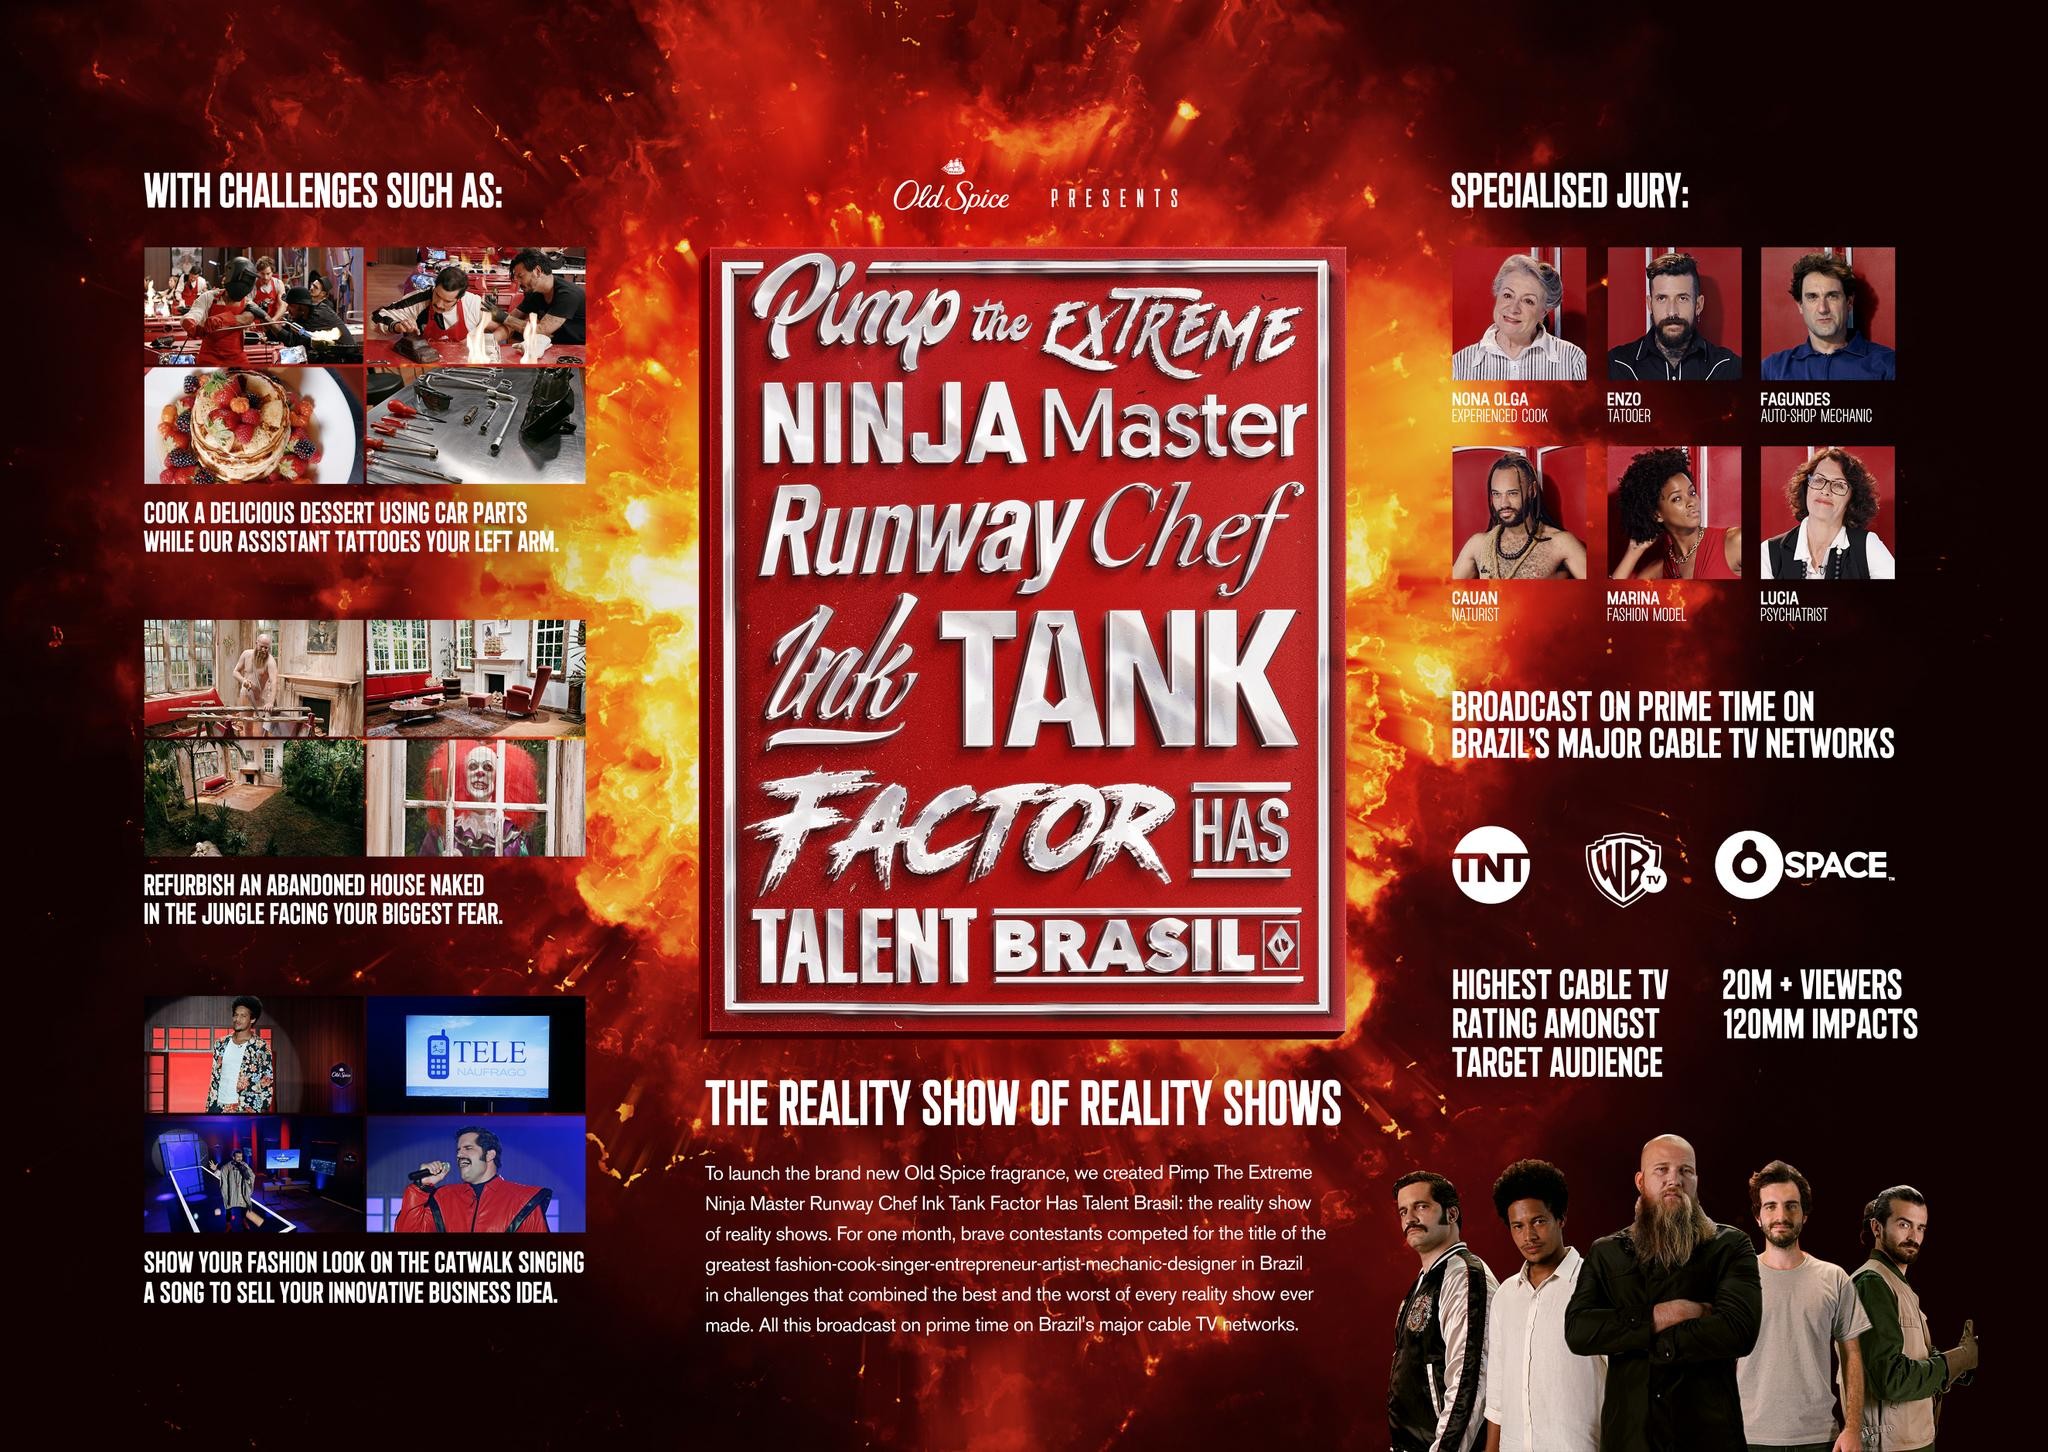 Pimp The Extreme Ninja Master Runway Chef Ink Tank Factor Has Talent Brasil